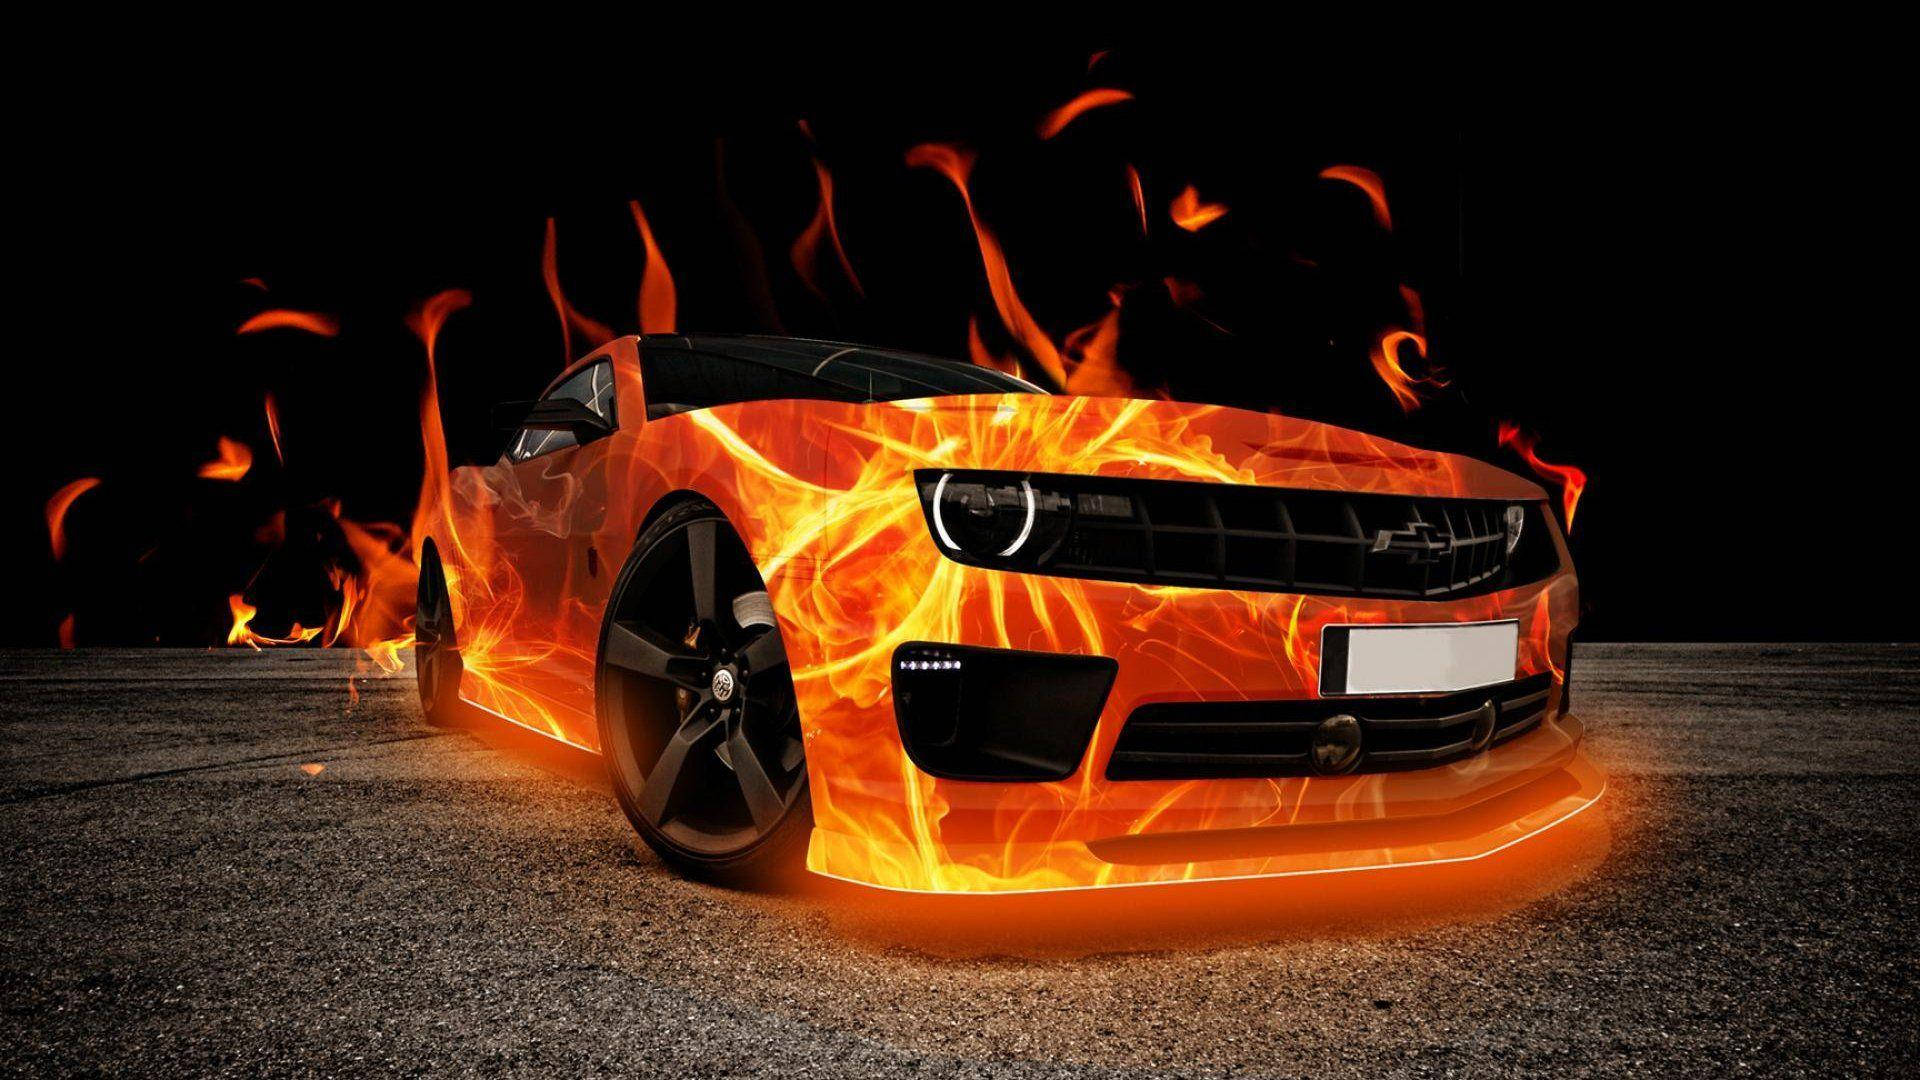 Fiery Beast - A Cool 3d Car On Fire Background